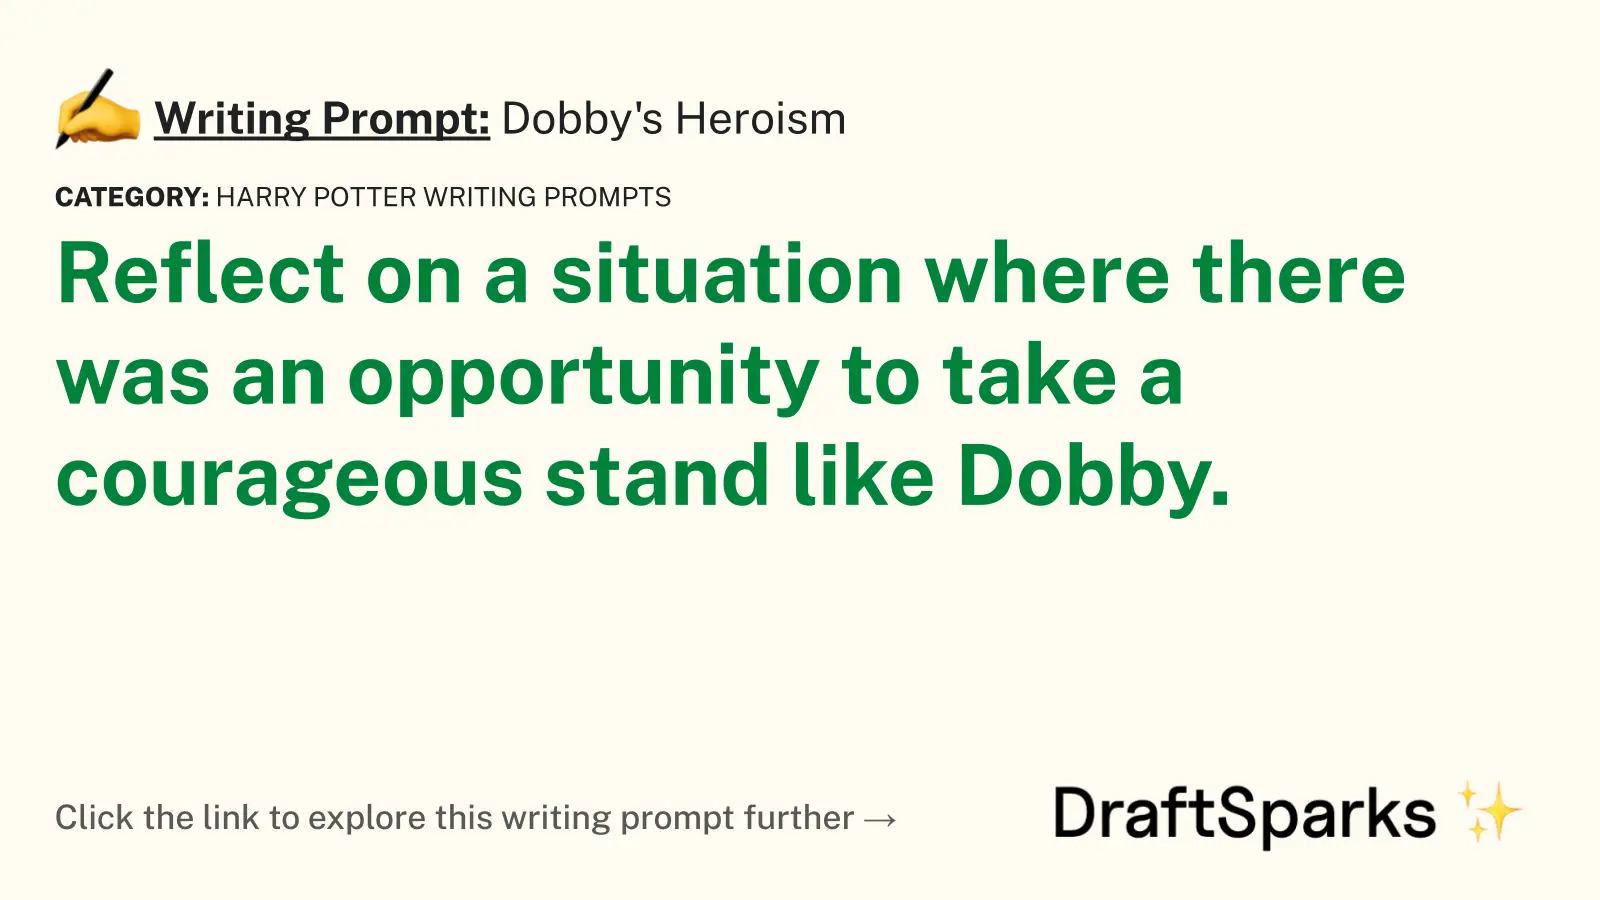 Dobby’s Heroism